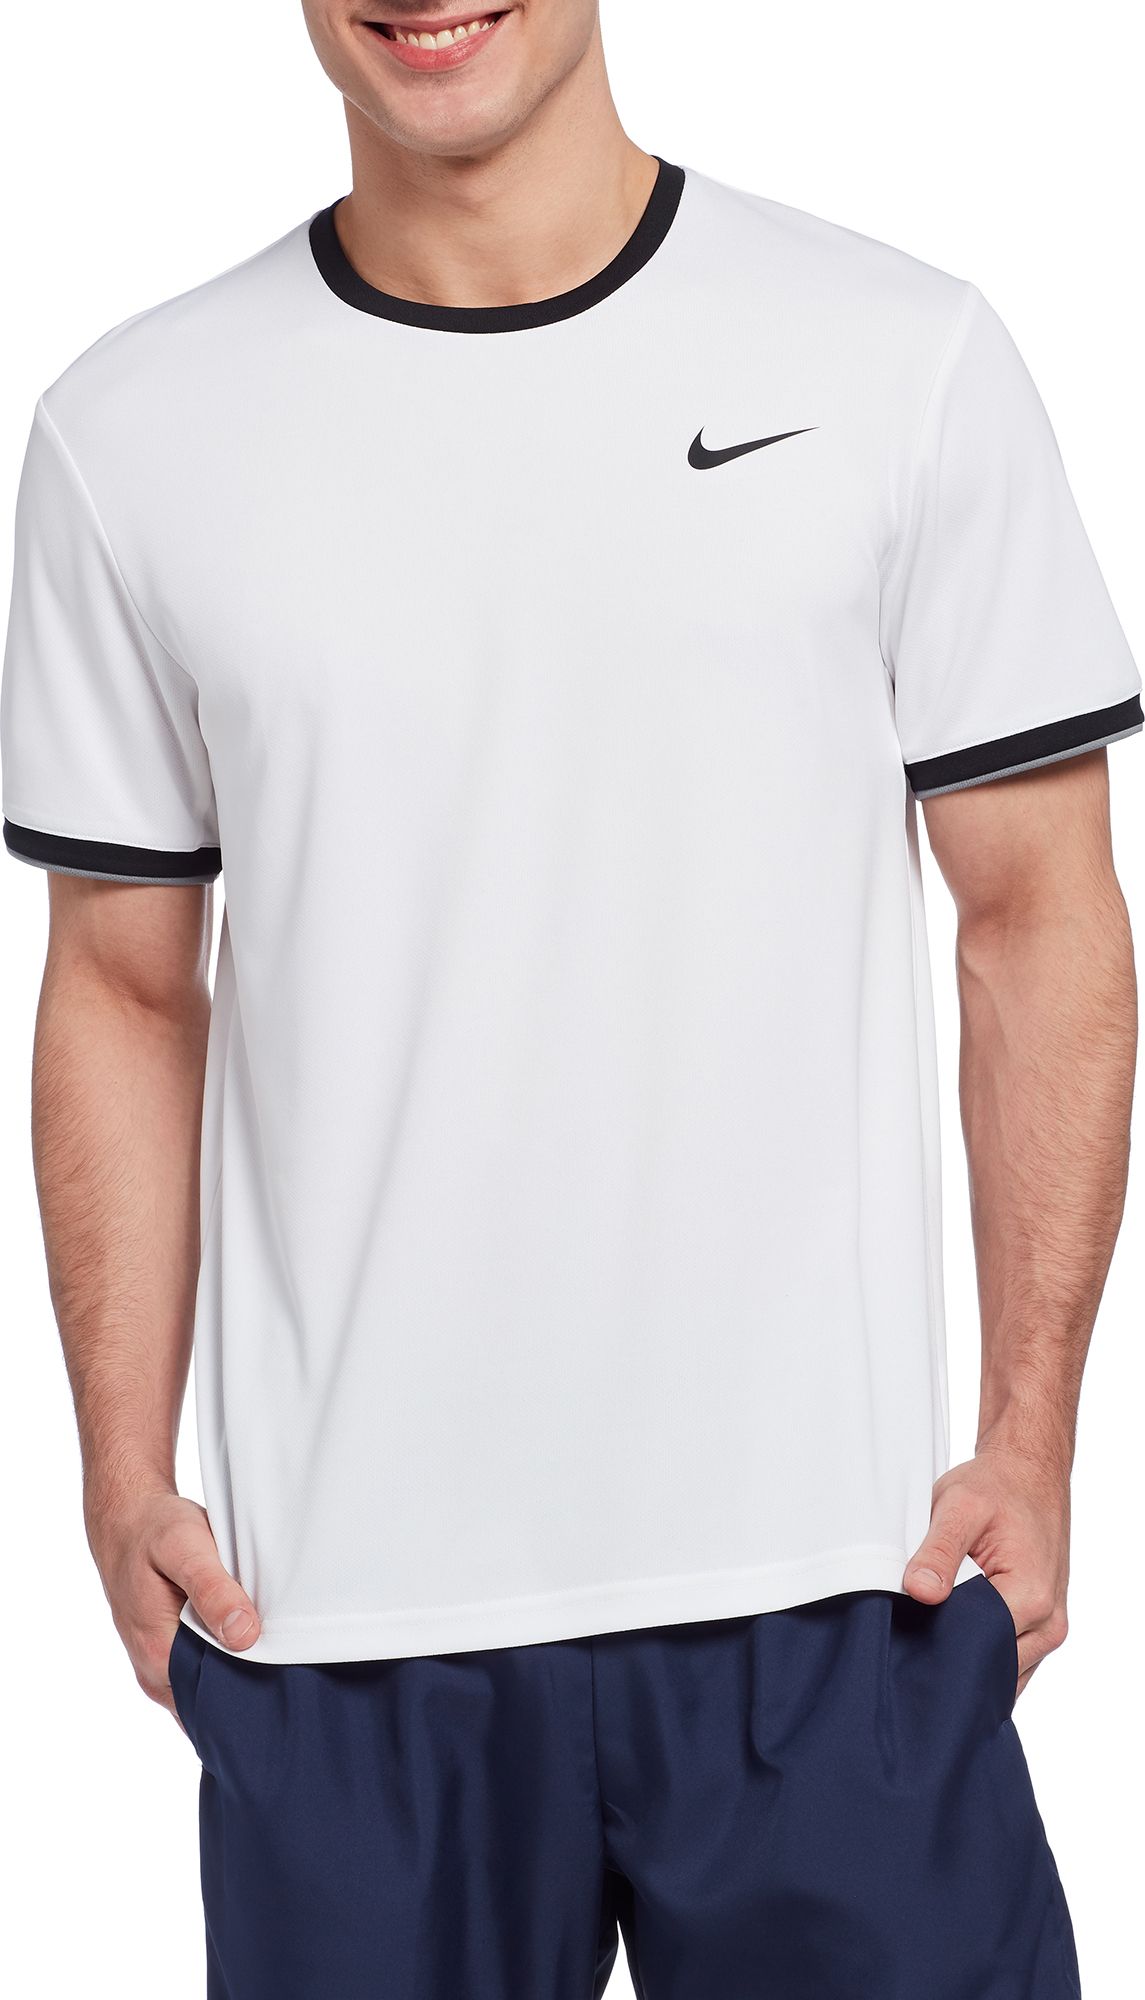 Nike Men's Court Dry Tennis Shirt 